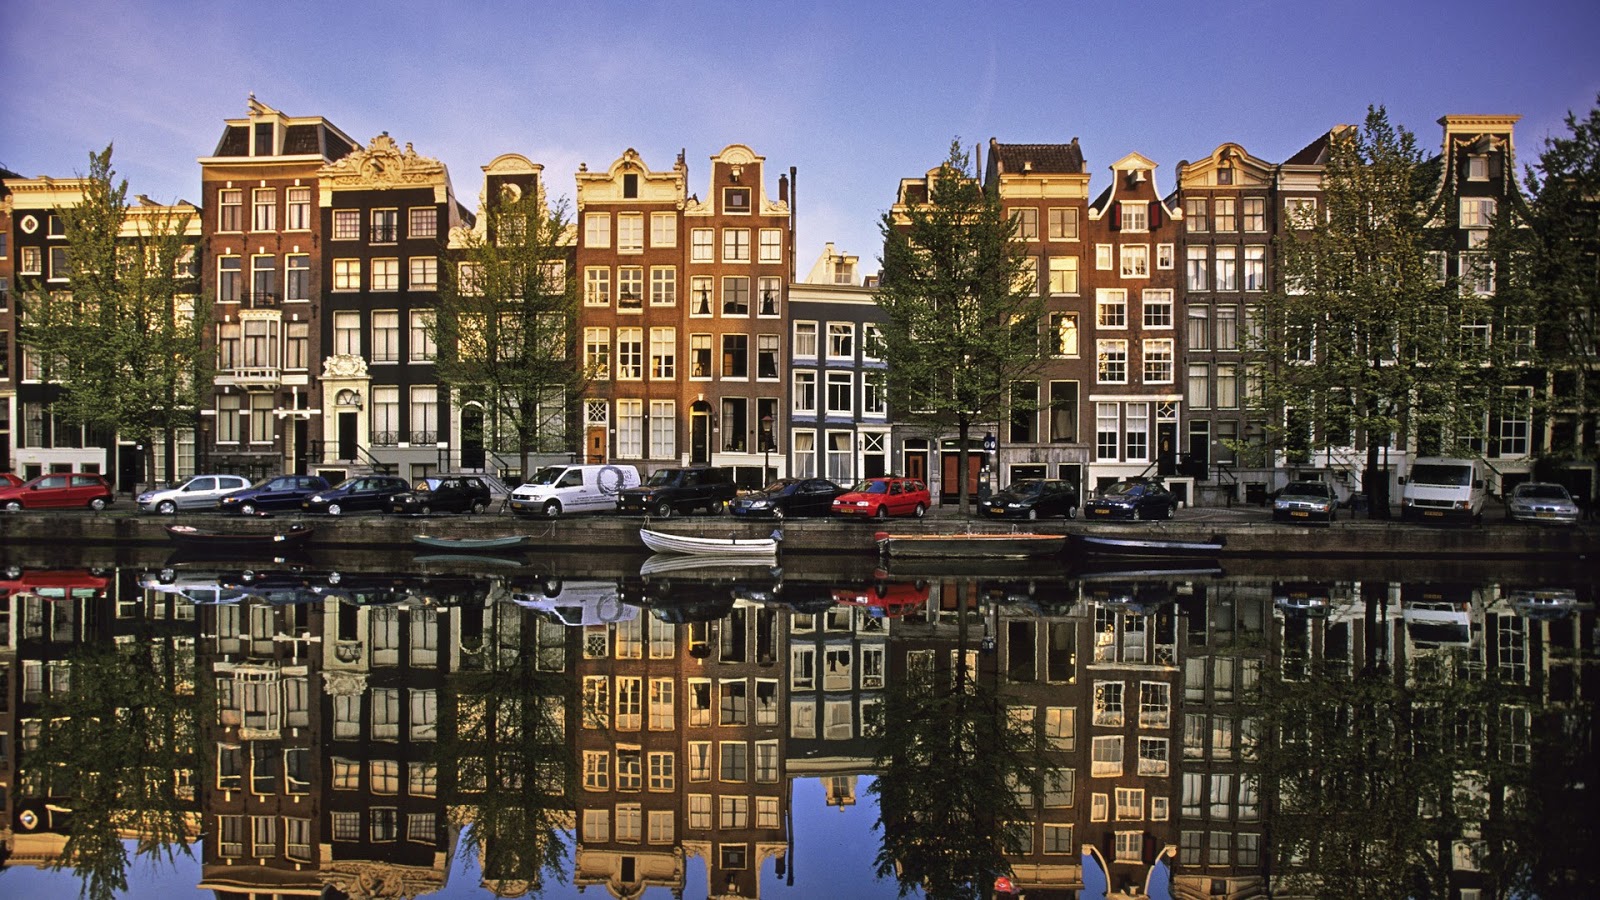 Amsterdã | Capital da Holanda - Geografia Total™